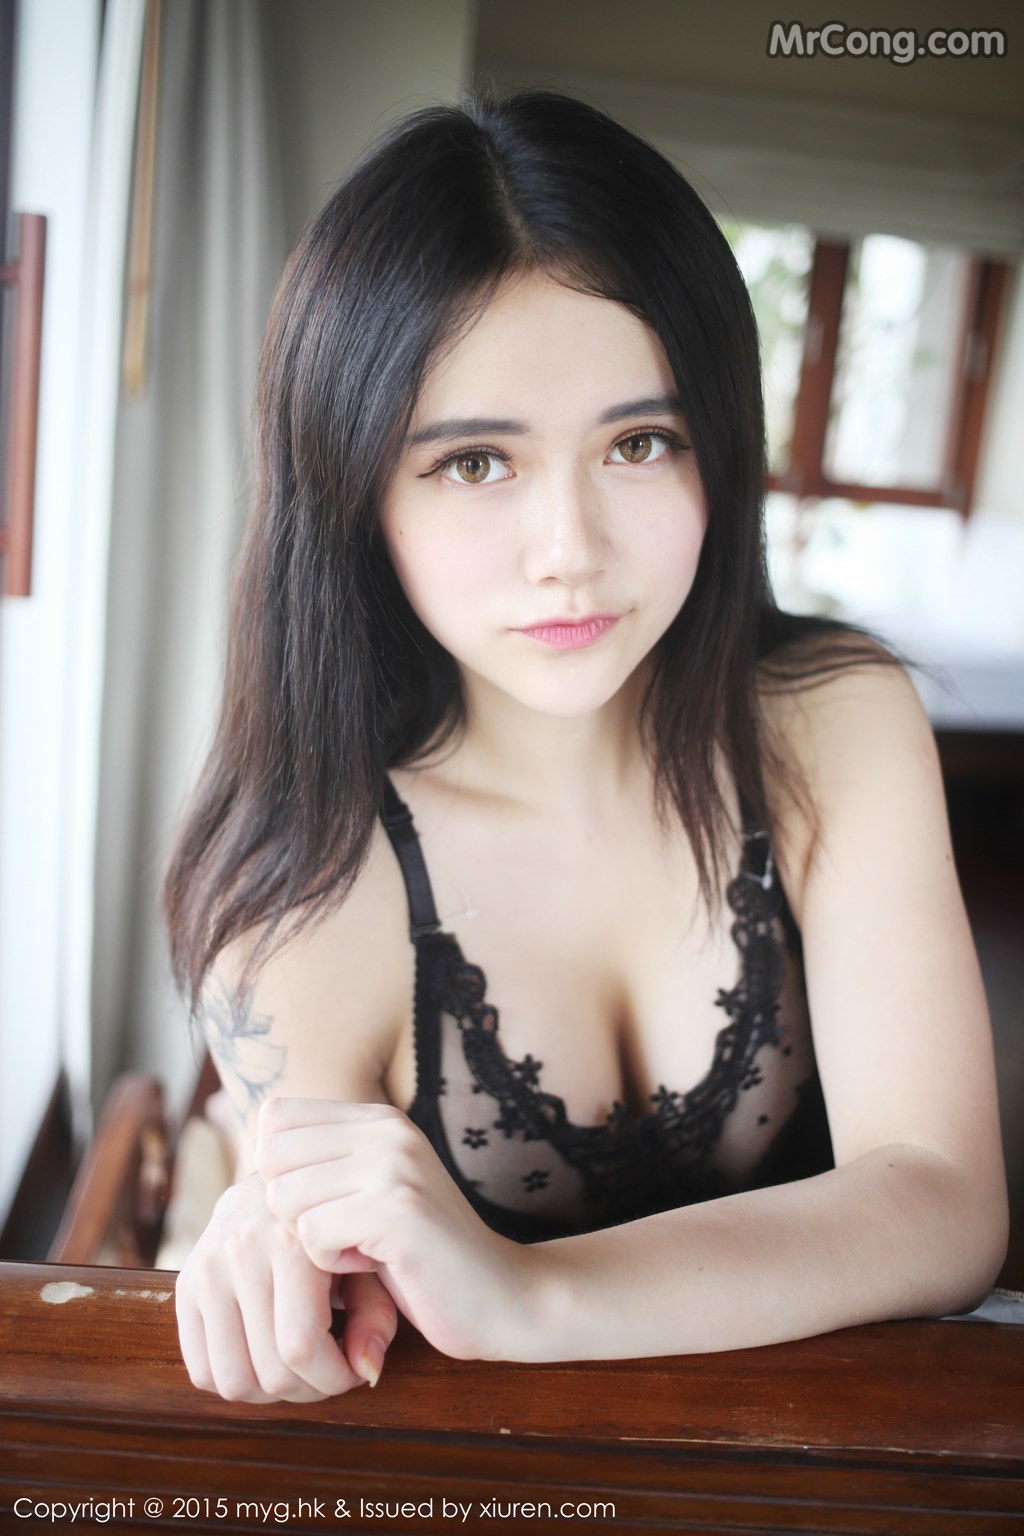 MyGirl Vol.177: Model Anna (李雪婷) (71 photos)